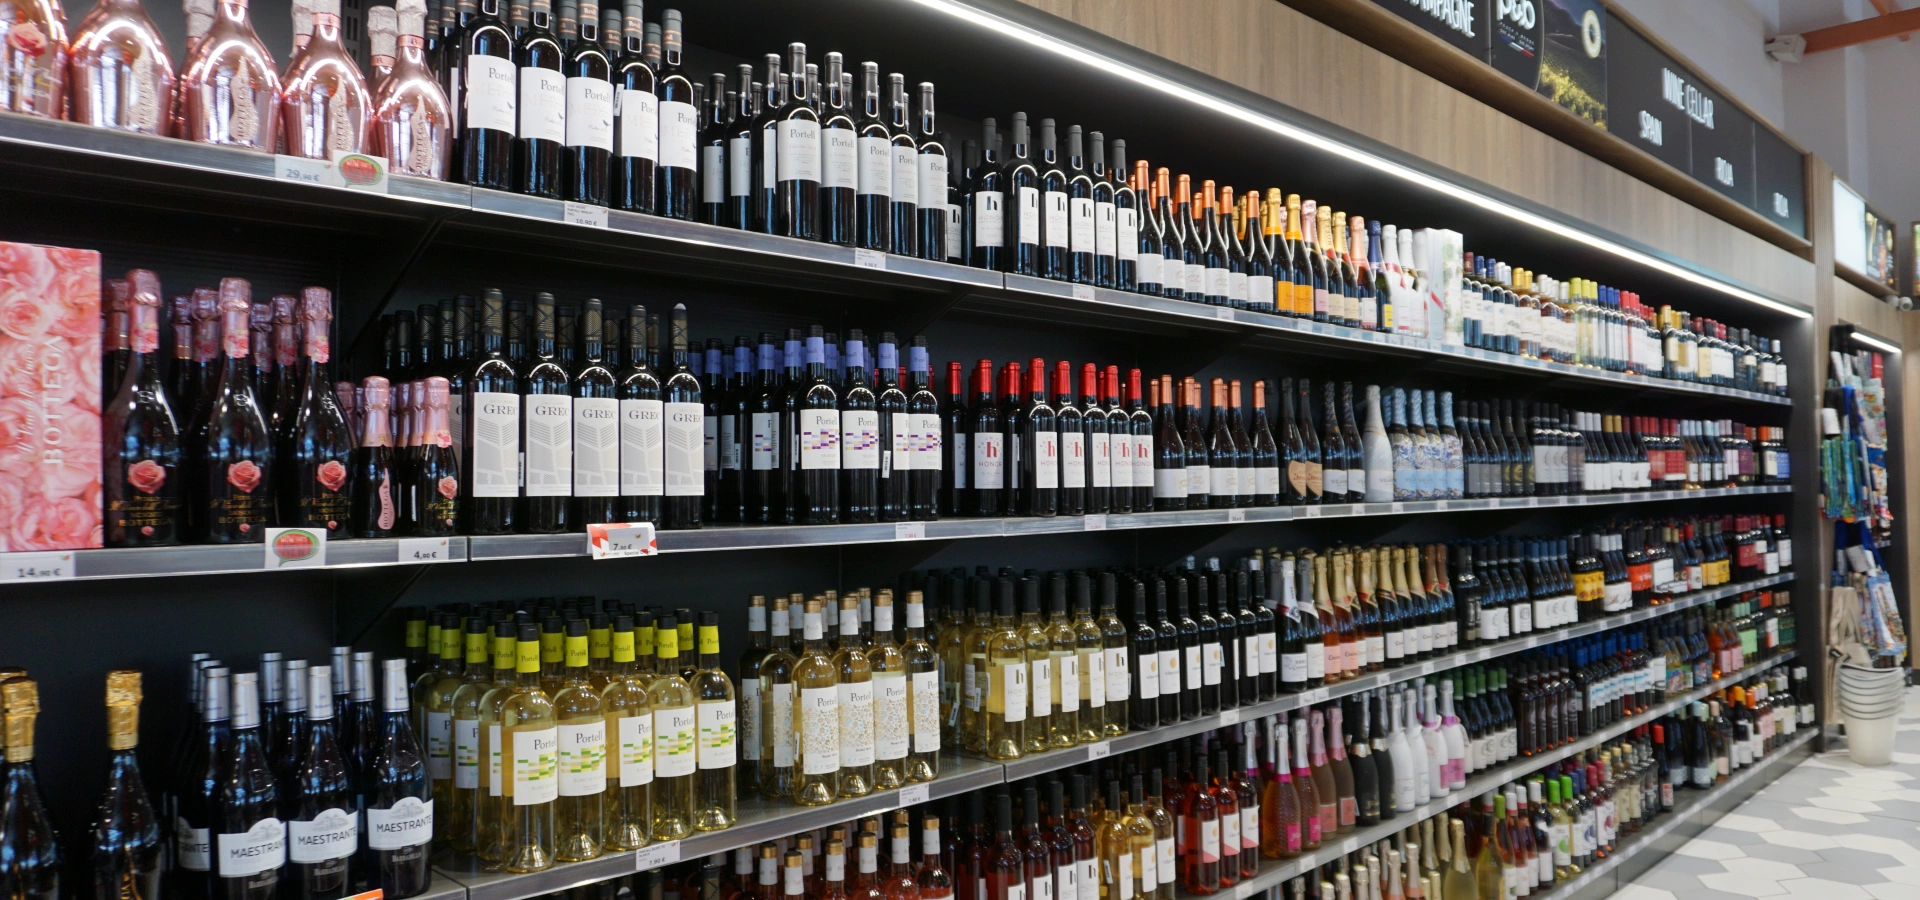 Alcohol aisle of a supermarket.